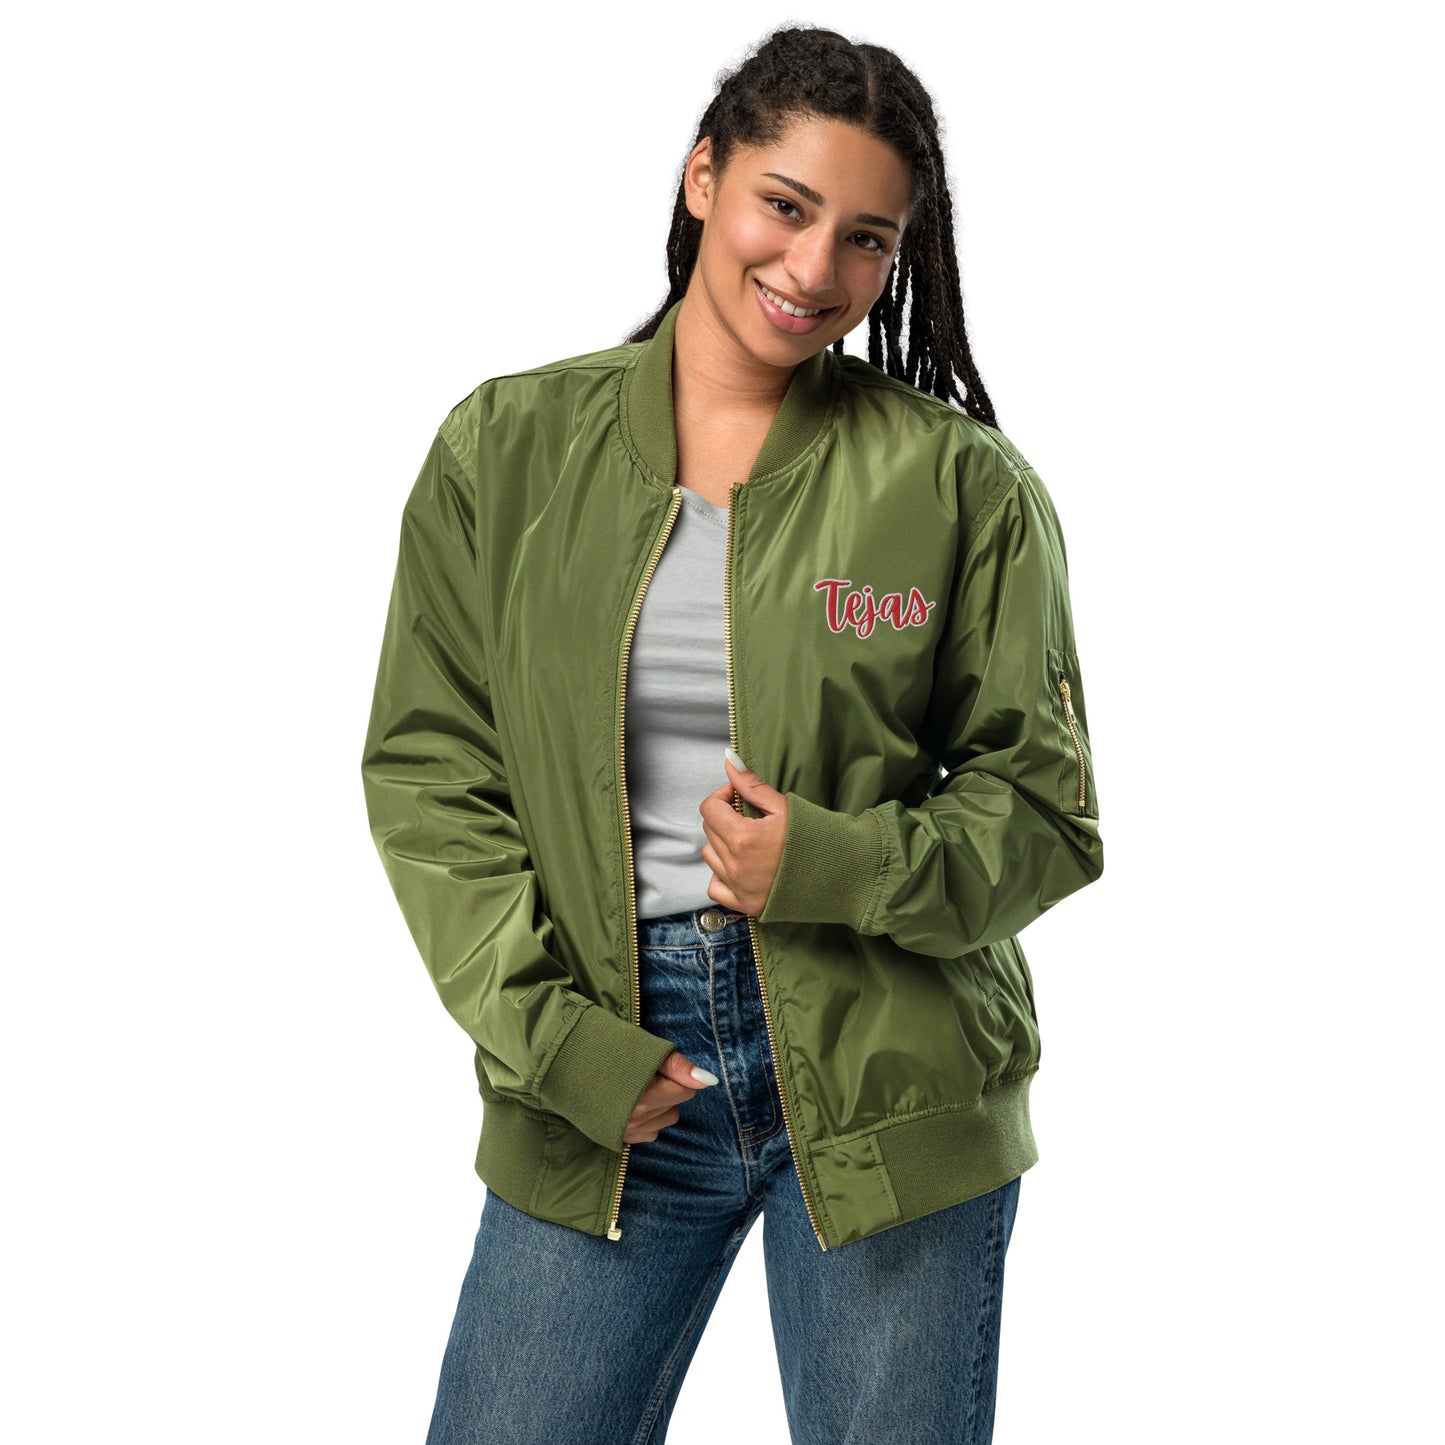 Tejas - Premium recycled bomber jacket